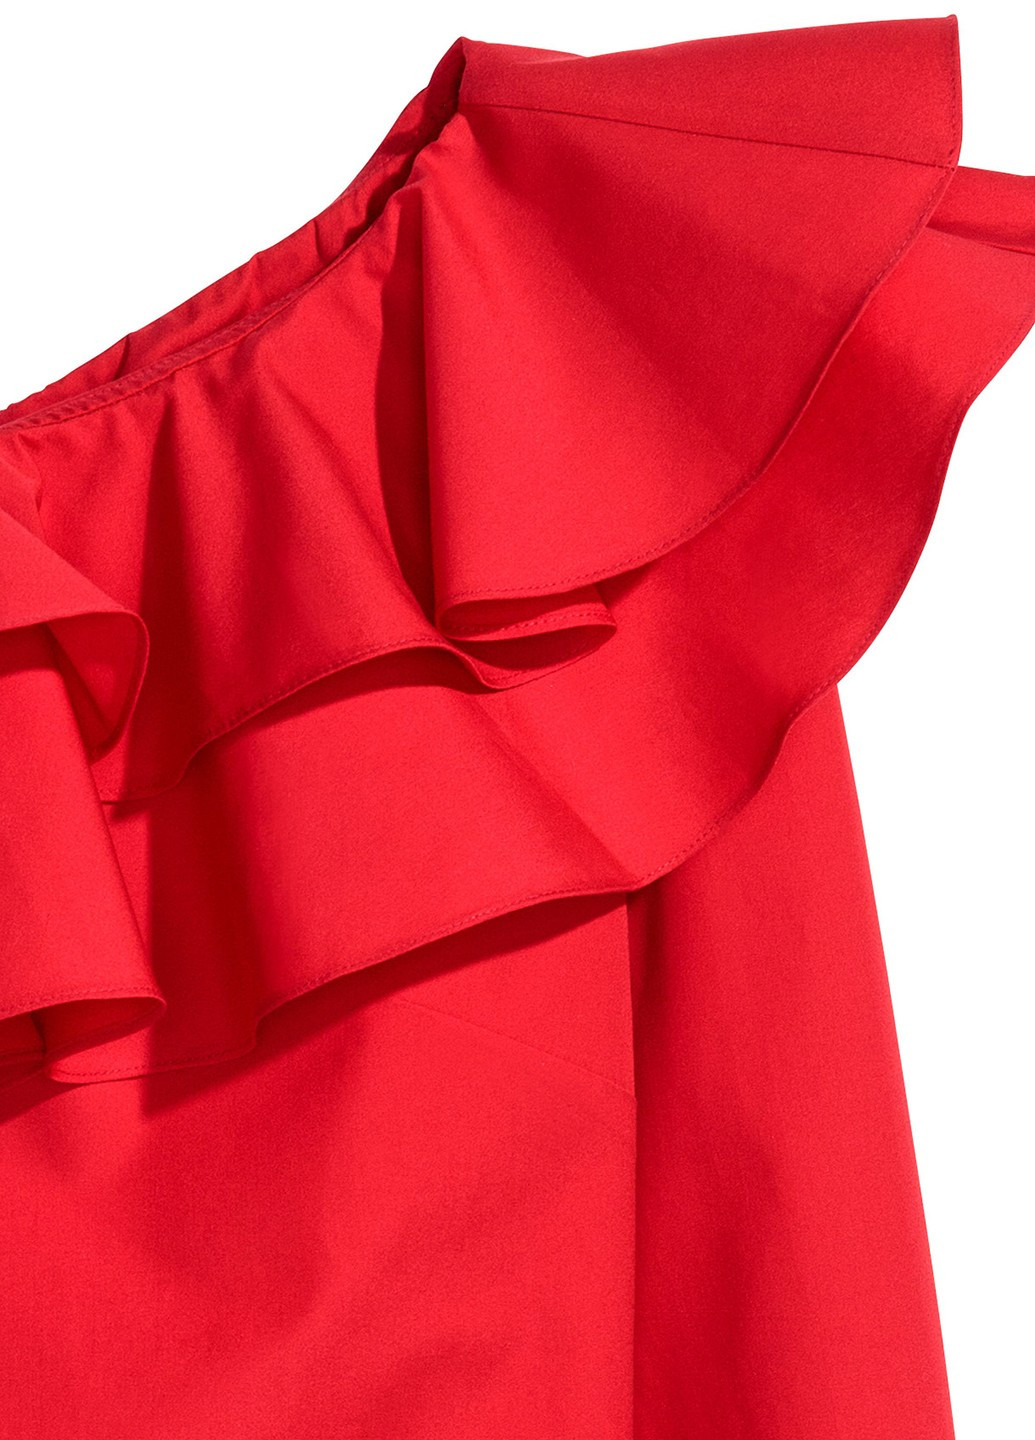 Красная демисезонная блузка H&M